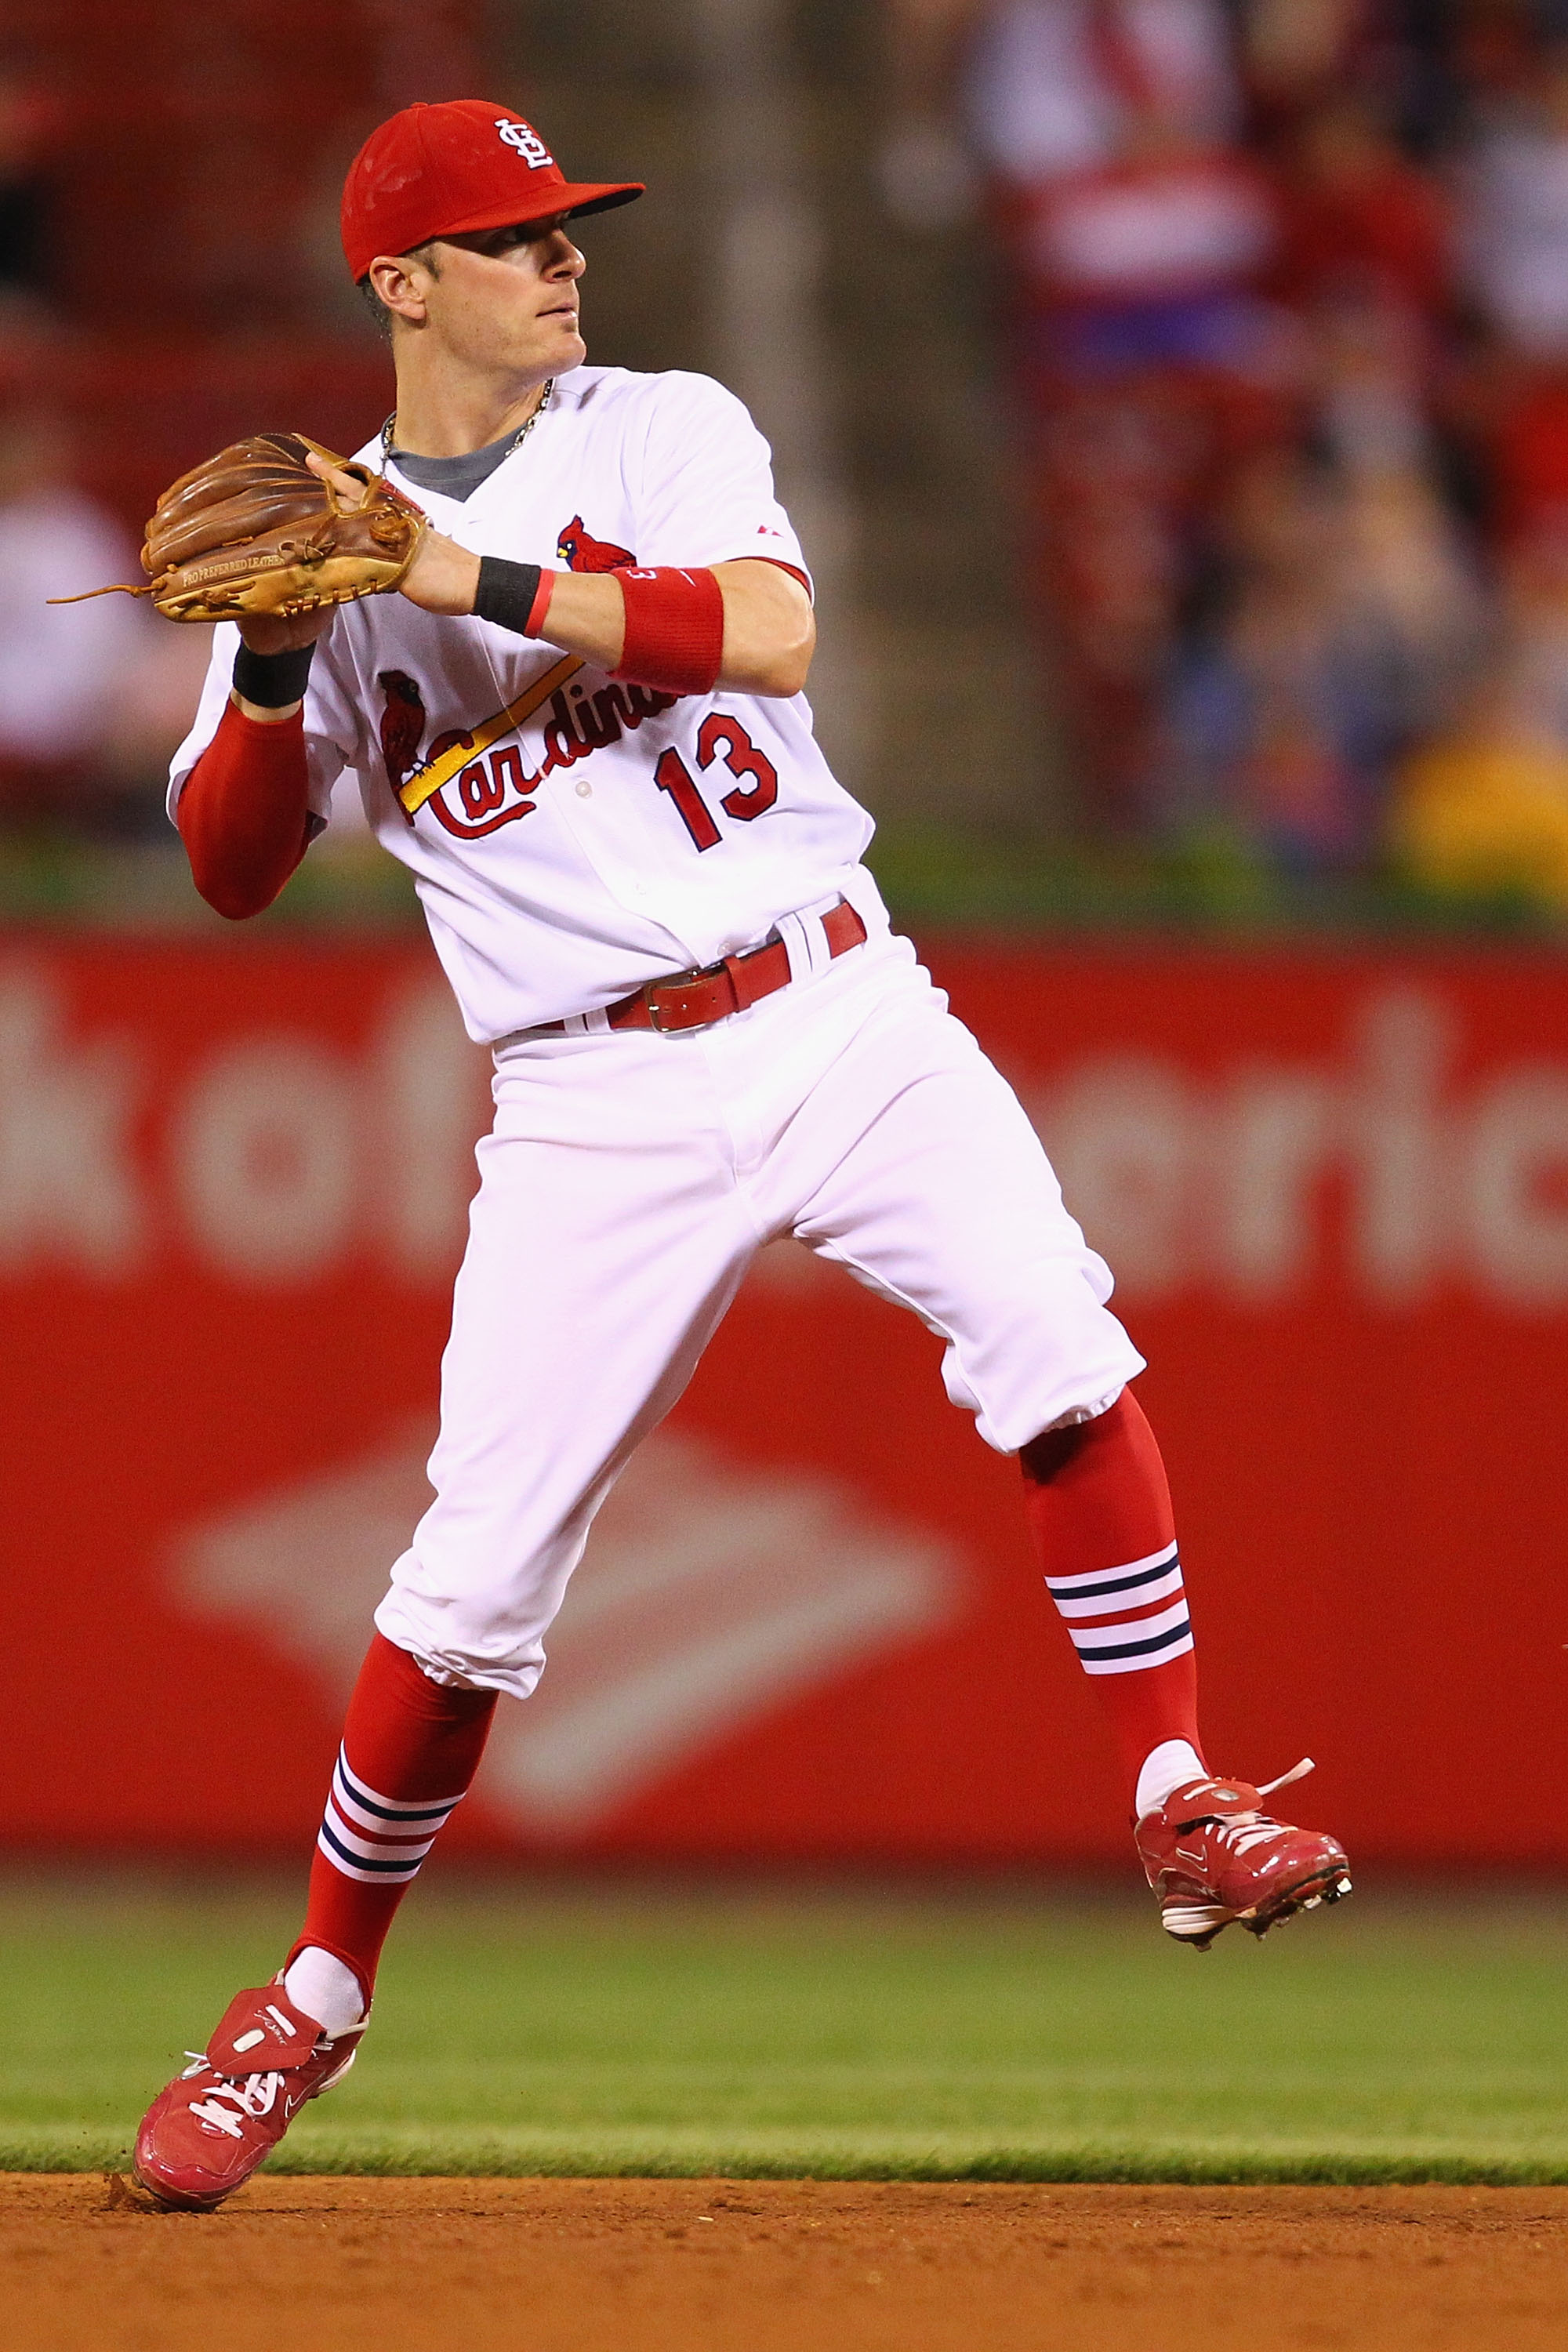 Sock Monkey 'Lou' St Louis Cardinals Baseball player I NEEEEED